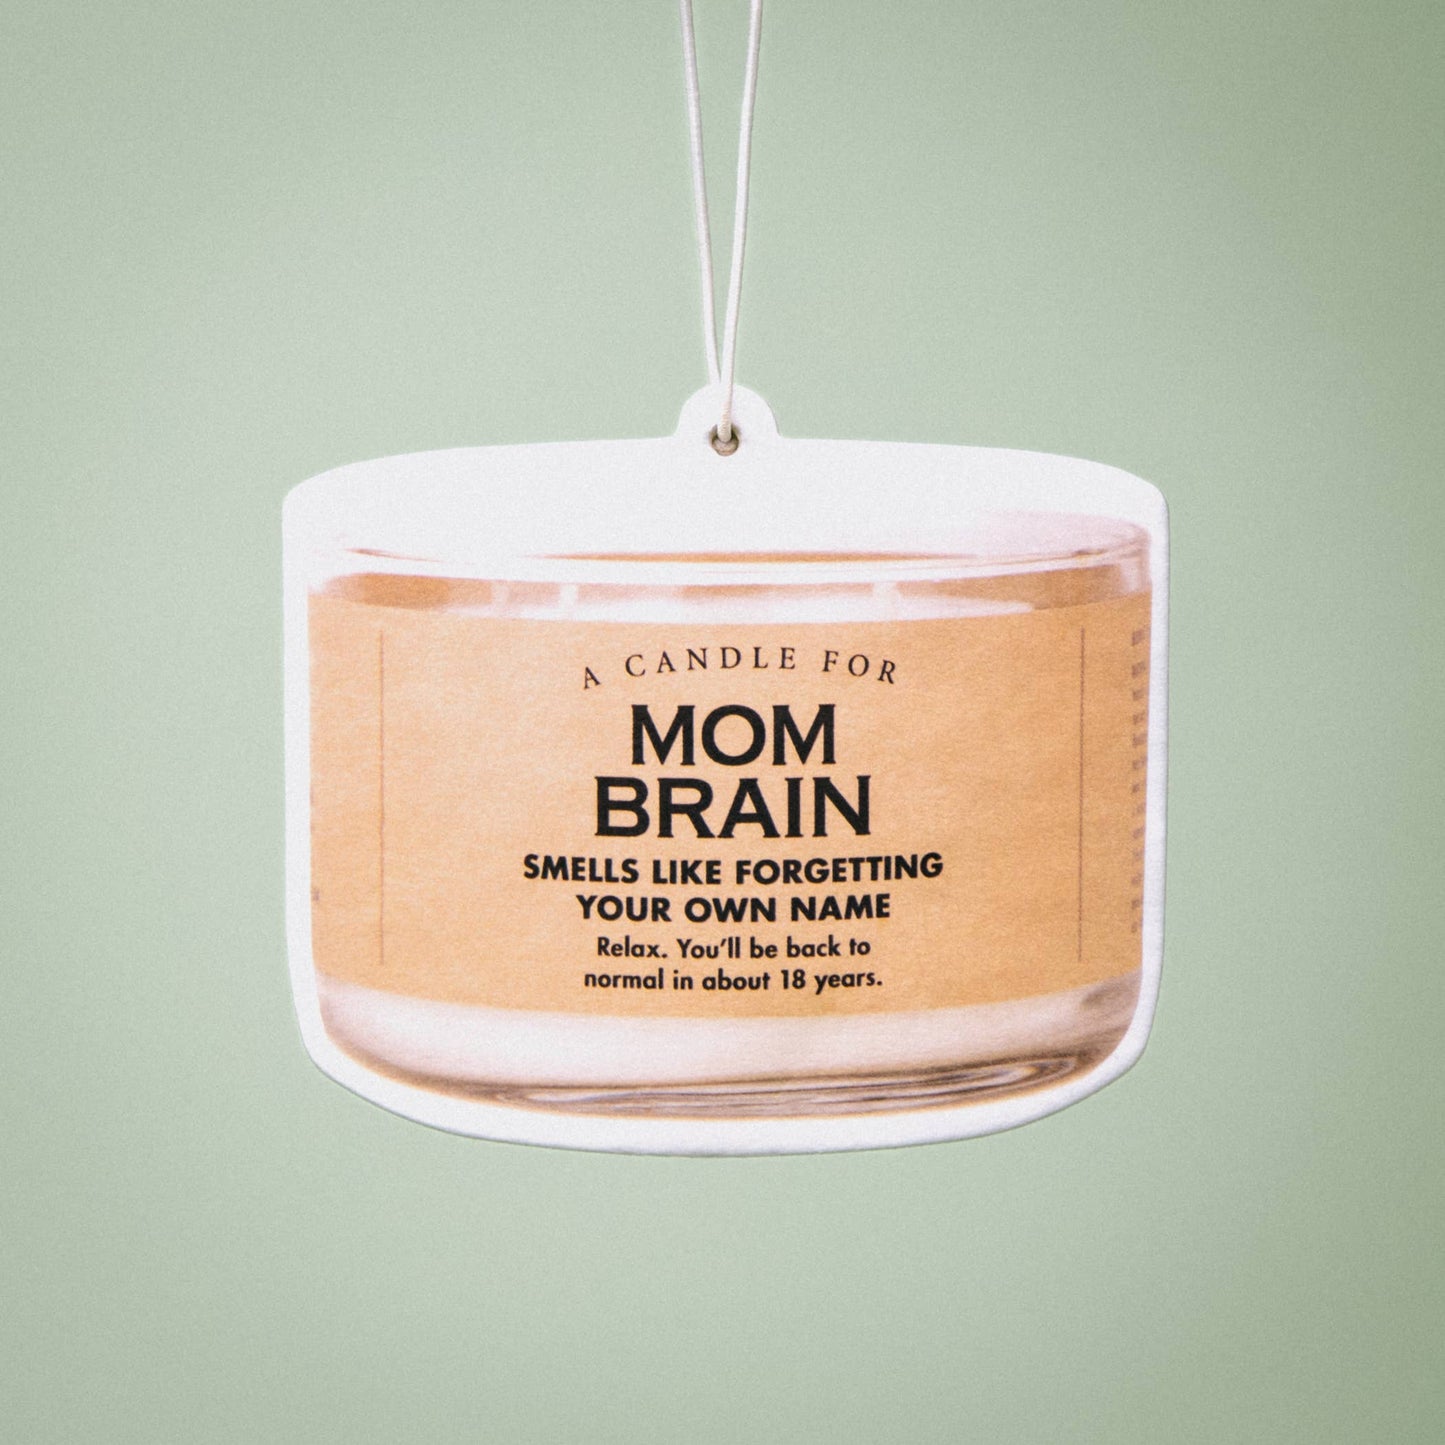 Whiskey River Soap Co. - Mom Brain Air Freshener | Funny Car Air Freshener